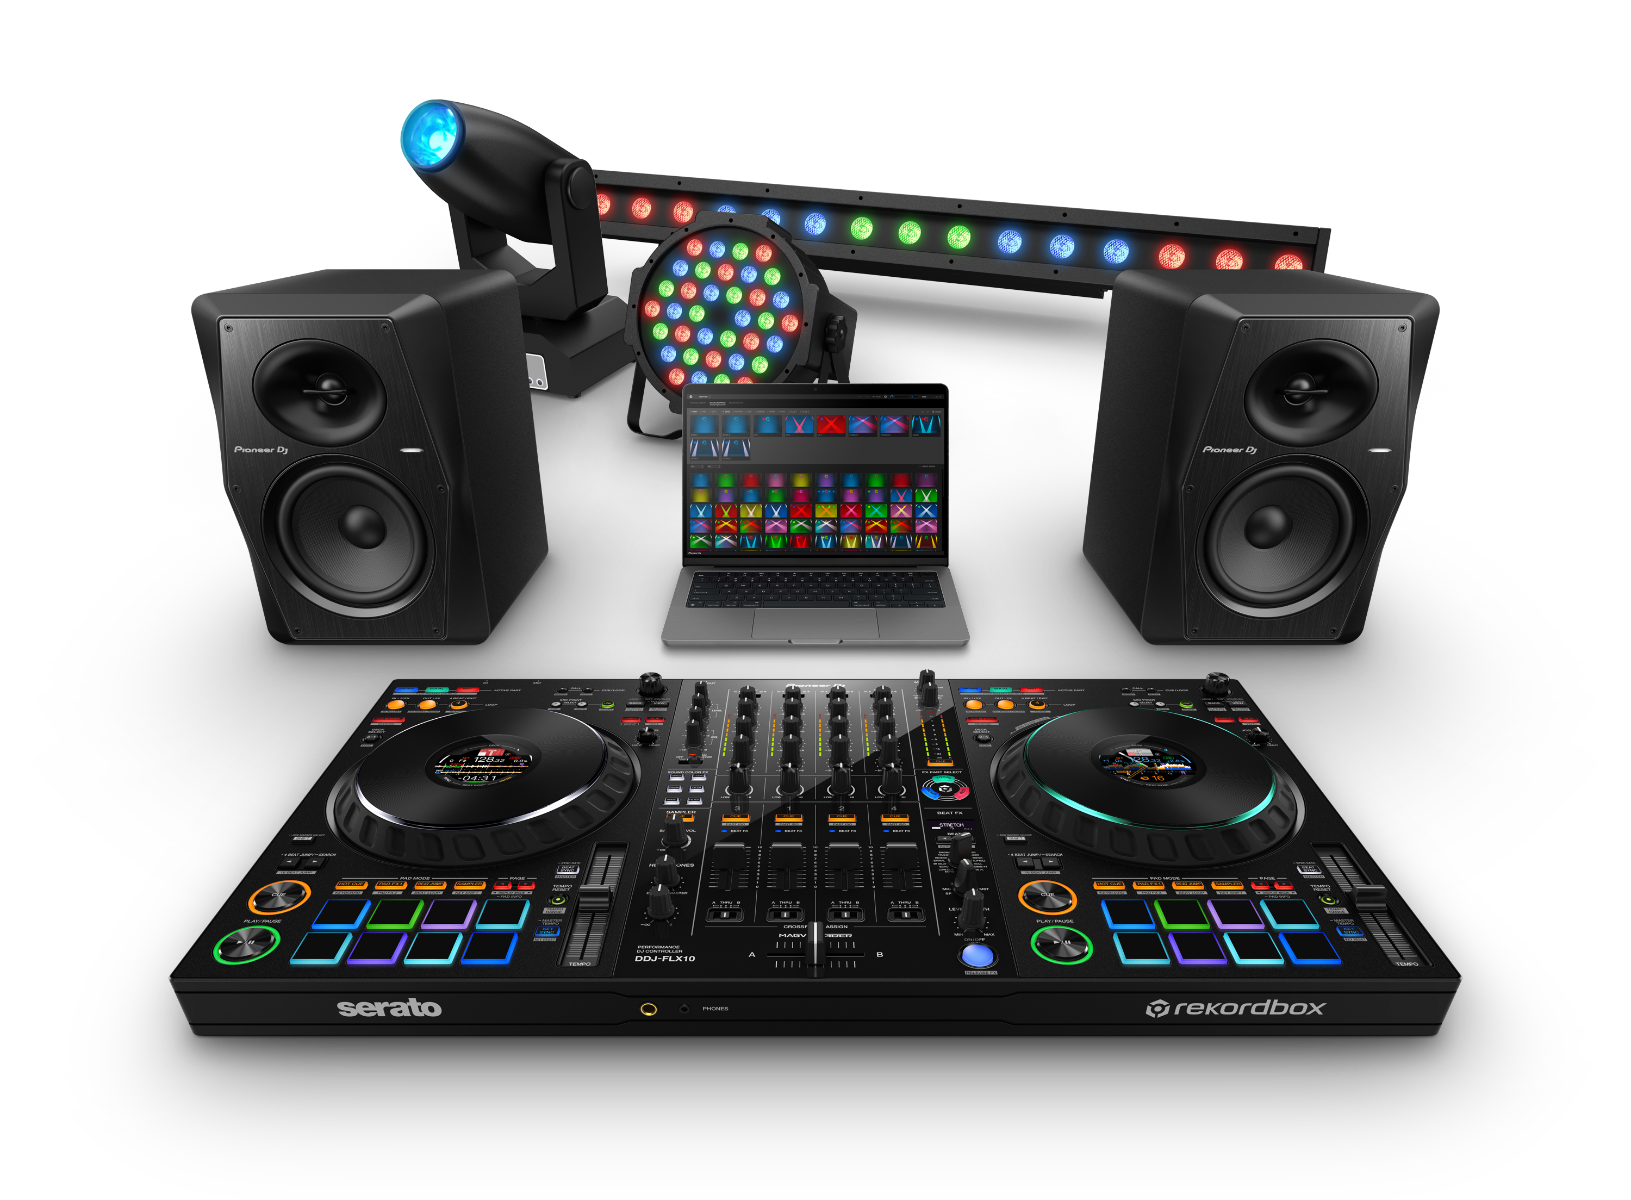 Pioneer DDJ-FLX10 - 4-Channel DJ Controller for rekordbox & Serato